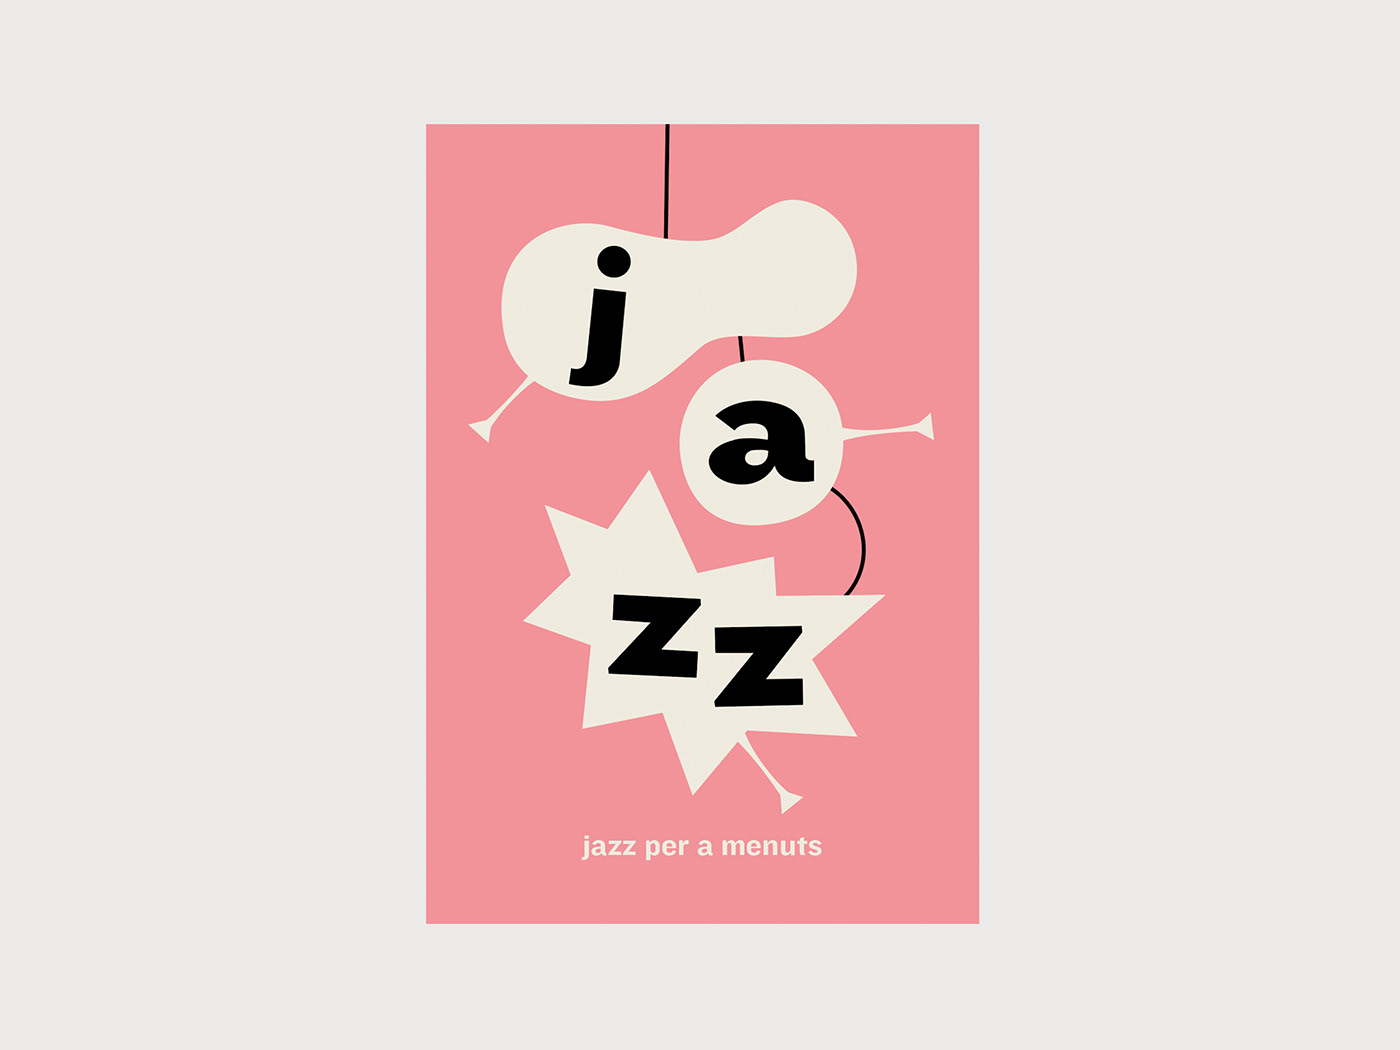 jazz valencia cartel poster typography  